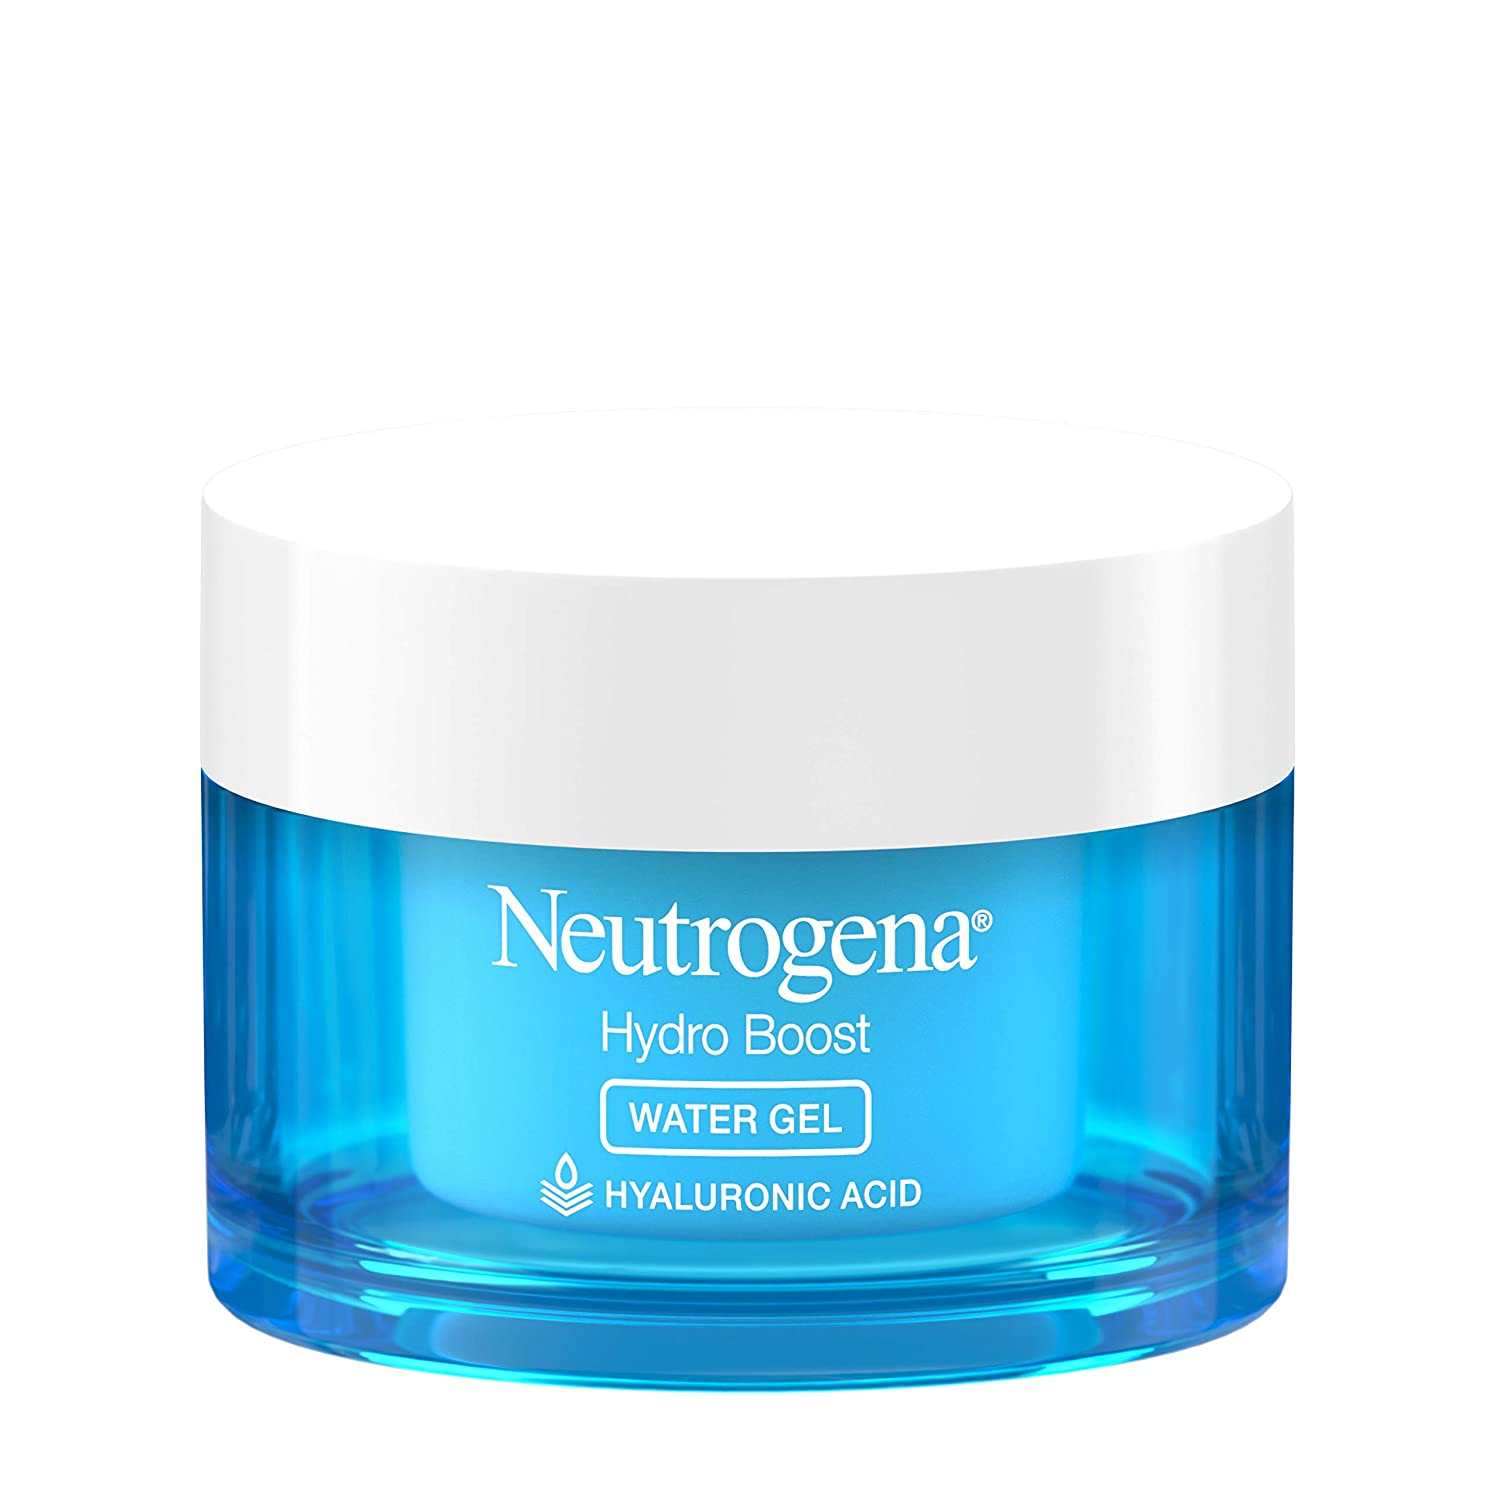 Neutrogena Hydro Boost Face Gel Moisturizer